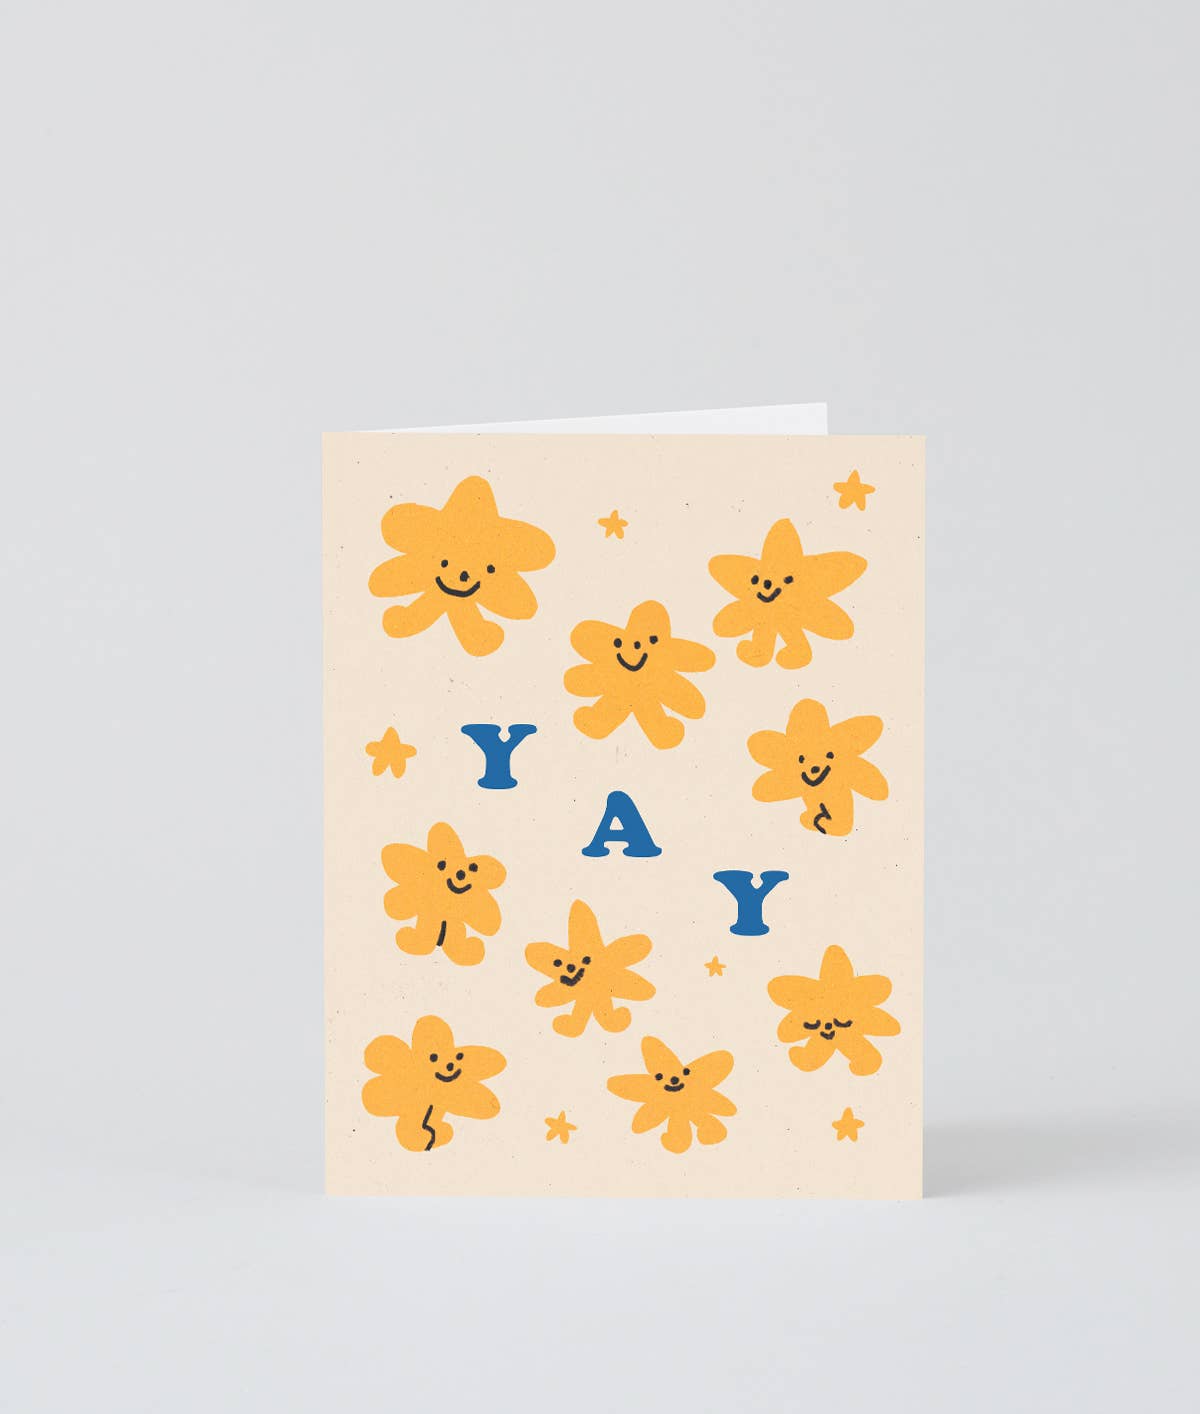 Wrap - 'Yay Stars' Kids Greetings Card - Preston ApothecaryWrap